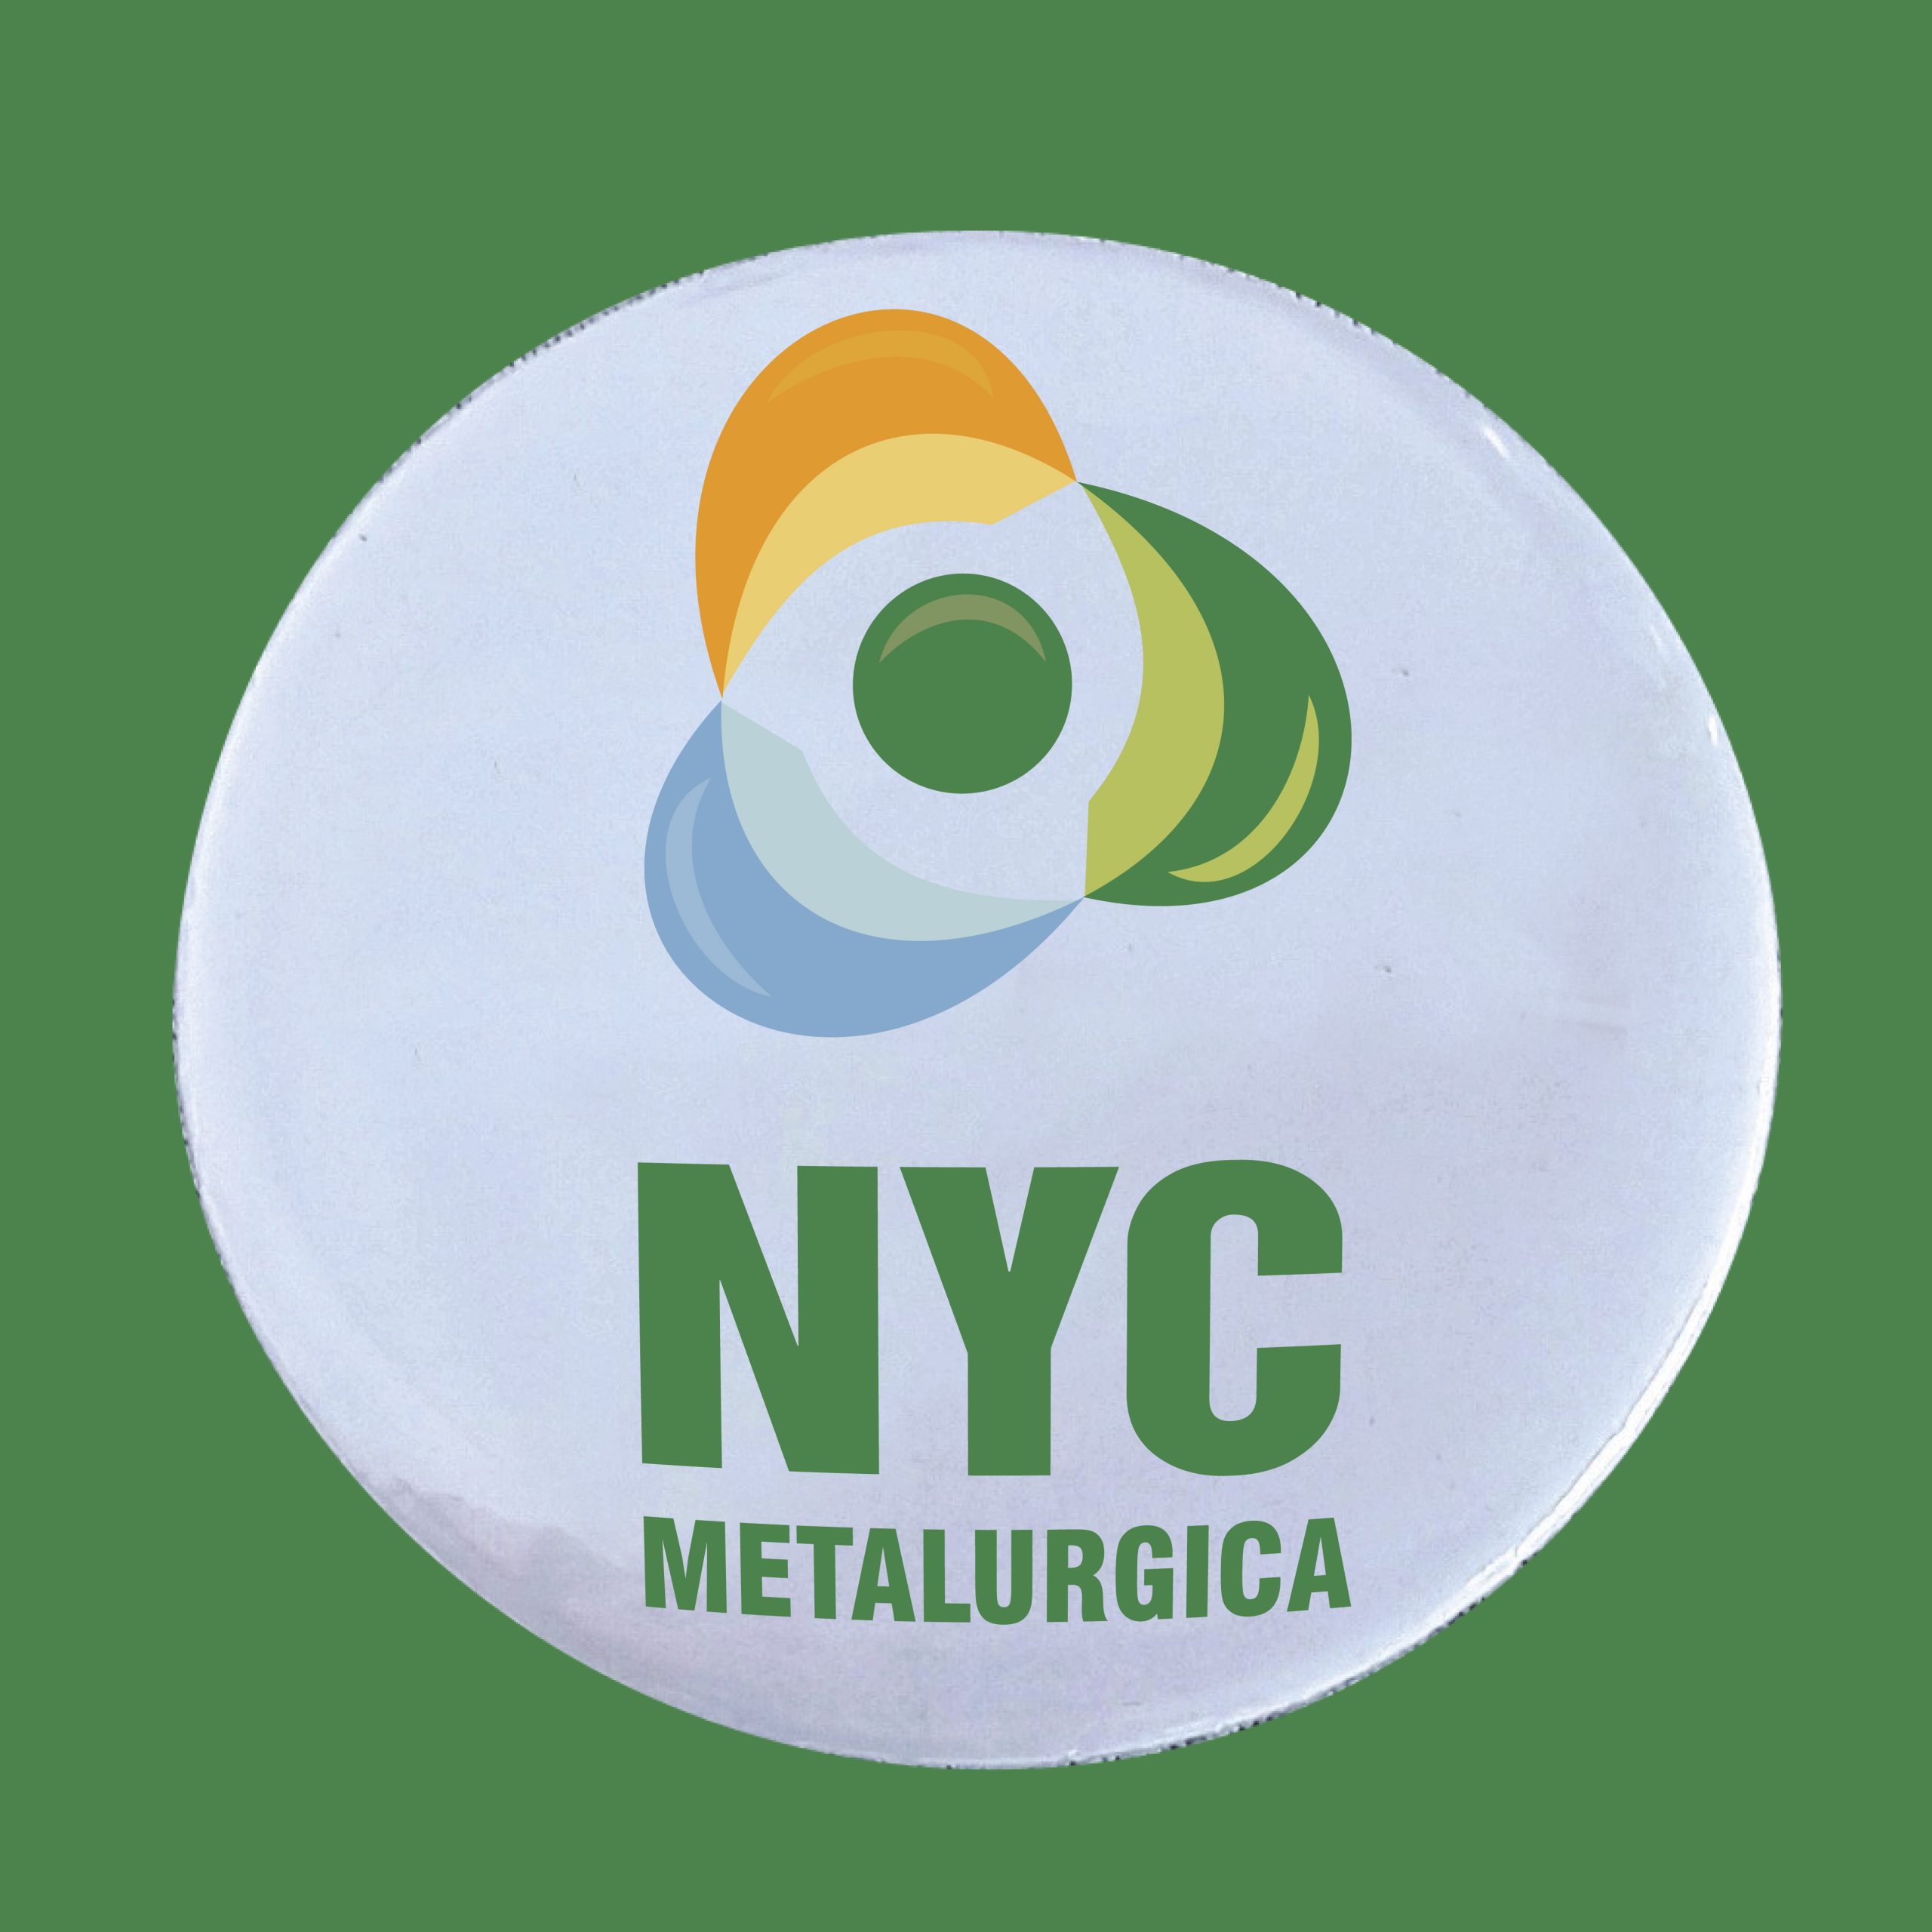 Metalurgica NyC